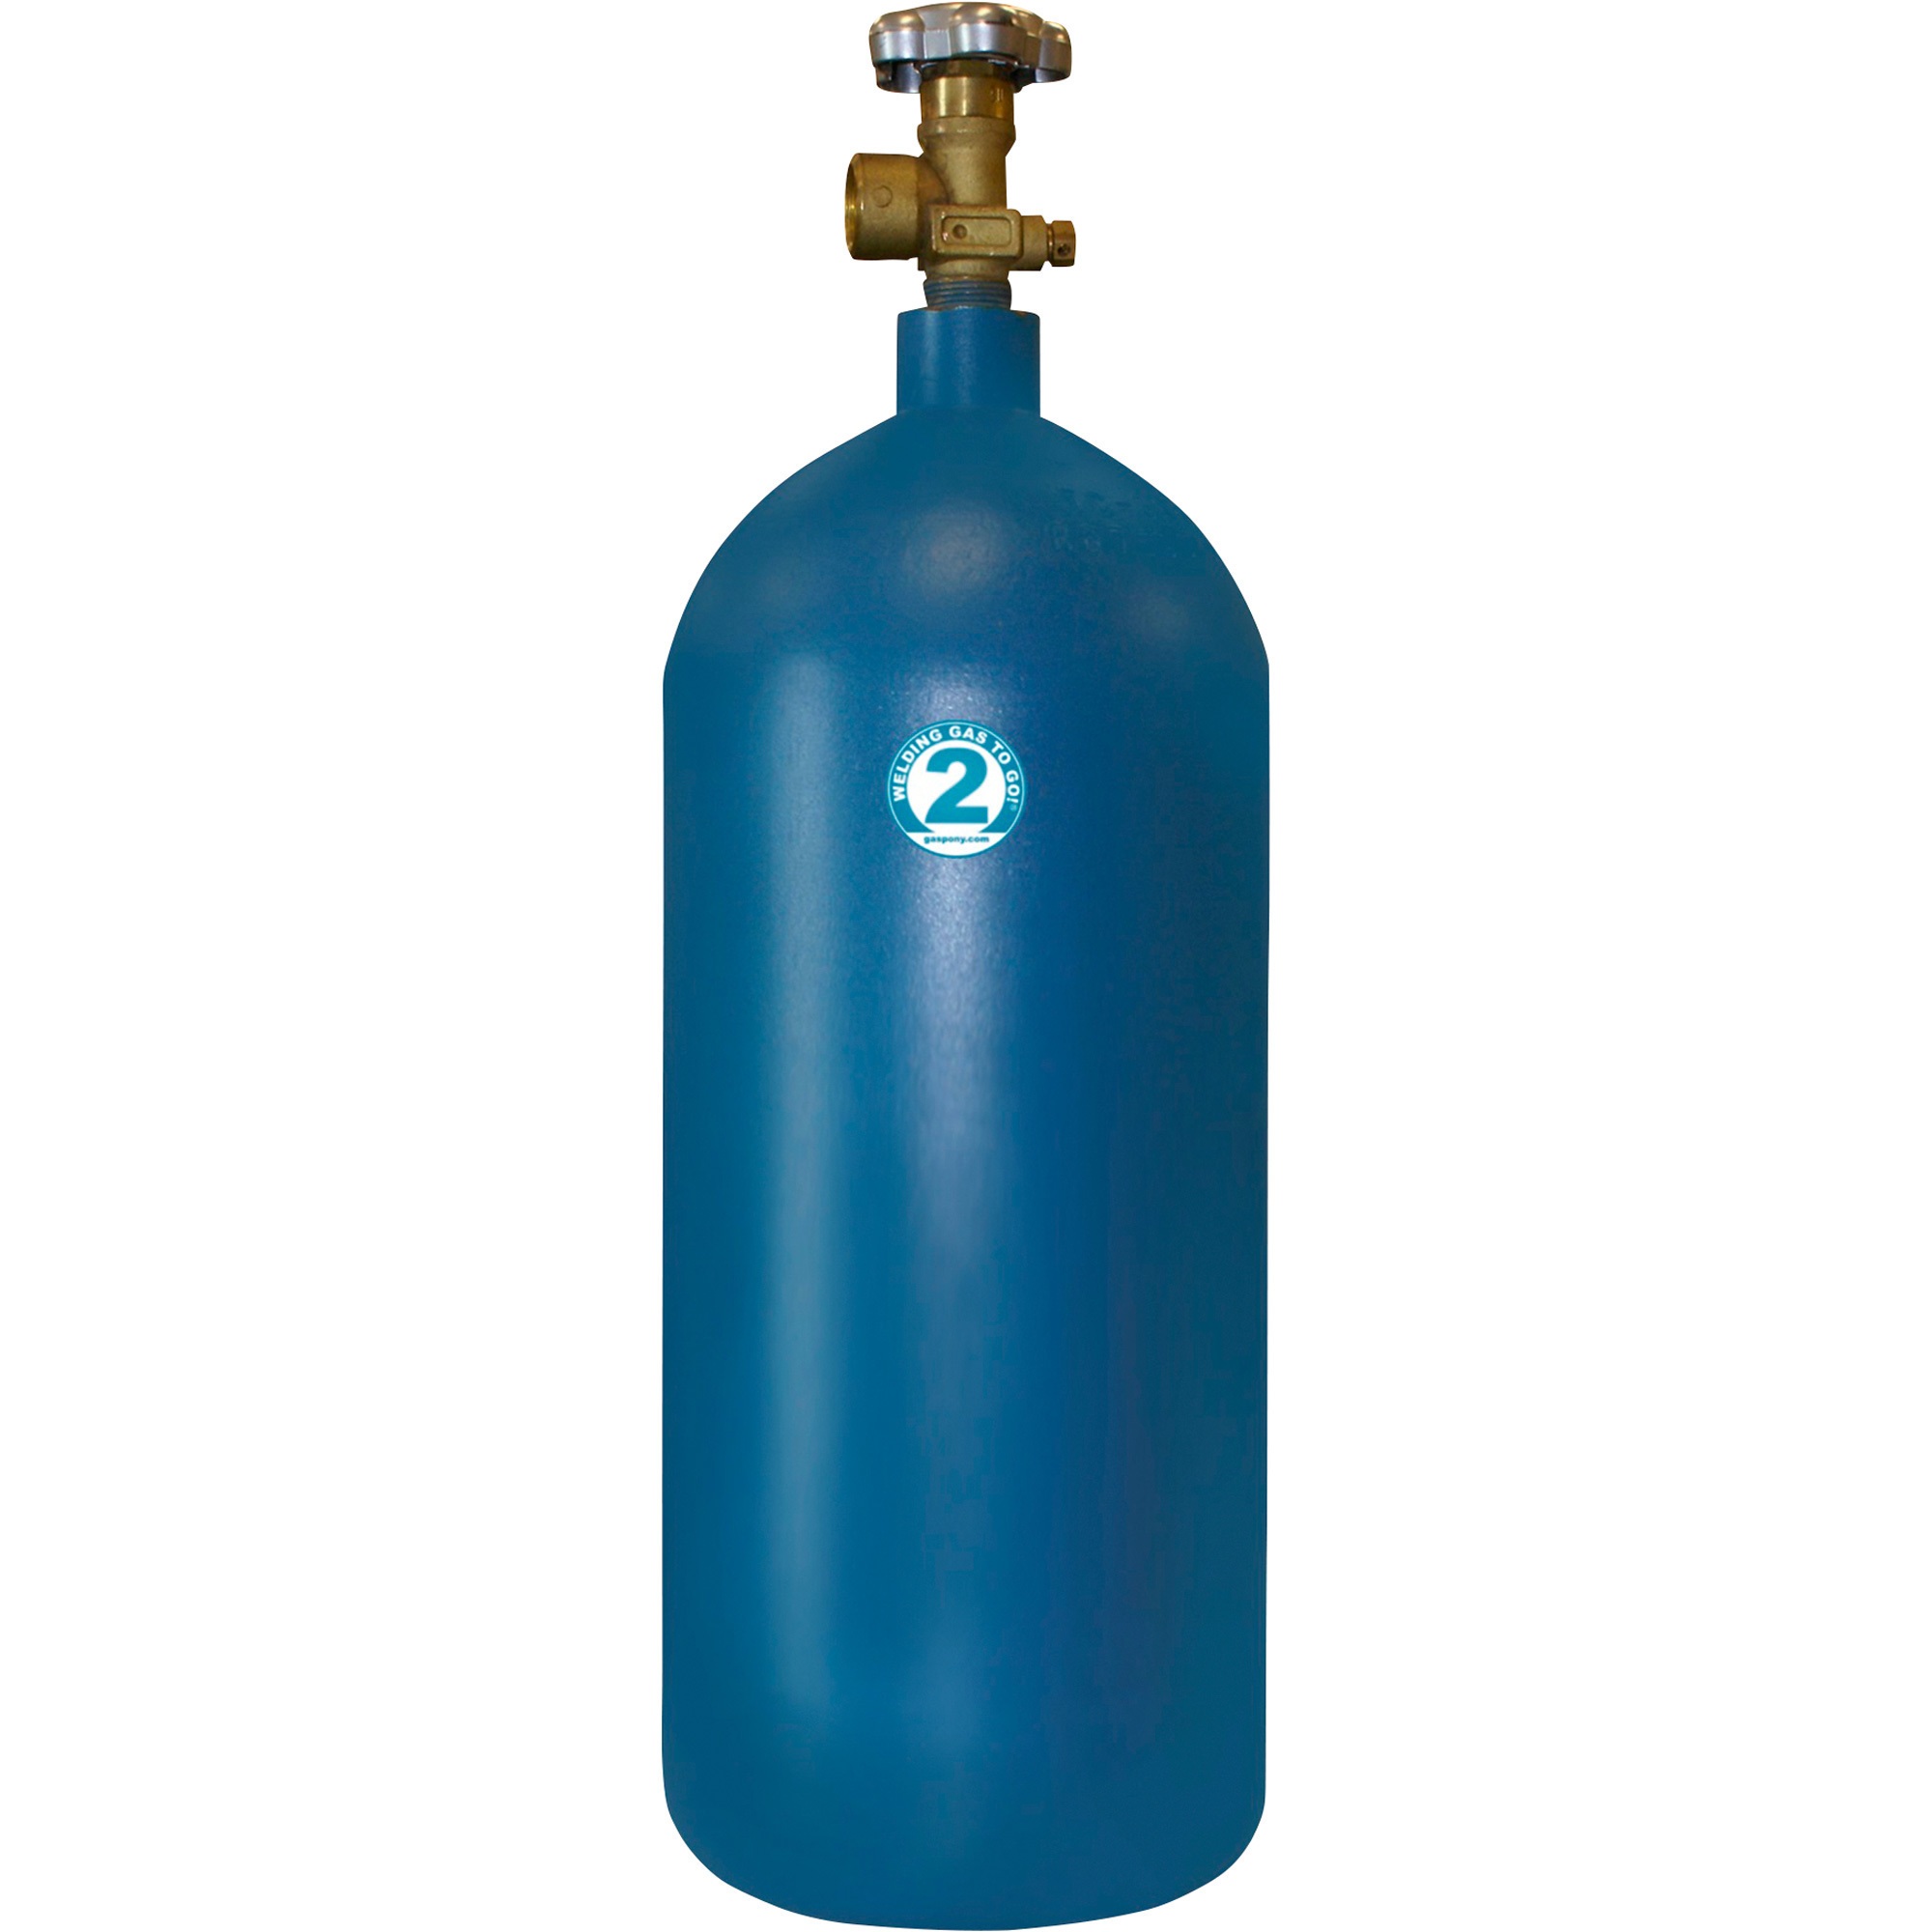 Thoroughbred Oxygen Gas Cylinder Fill or Exchange â Size #2, 40CF